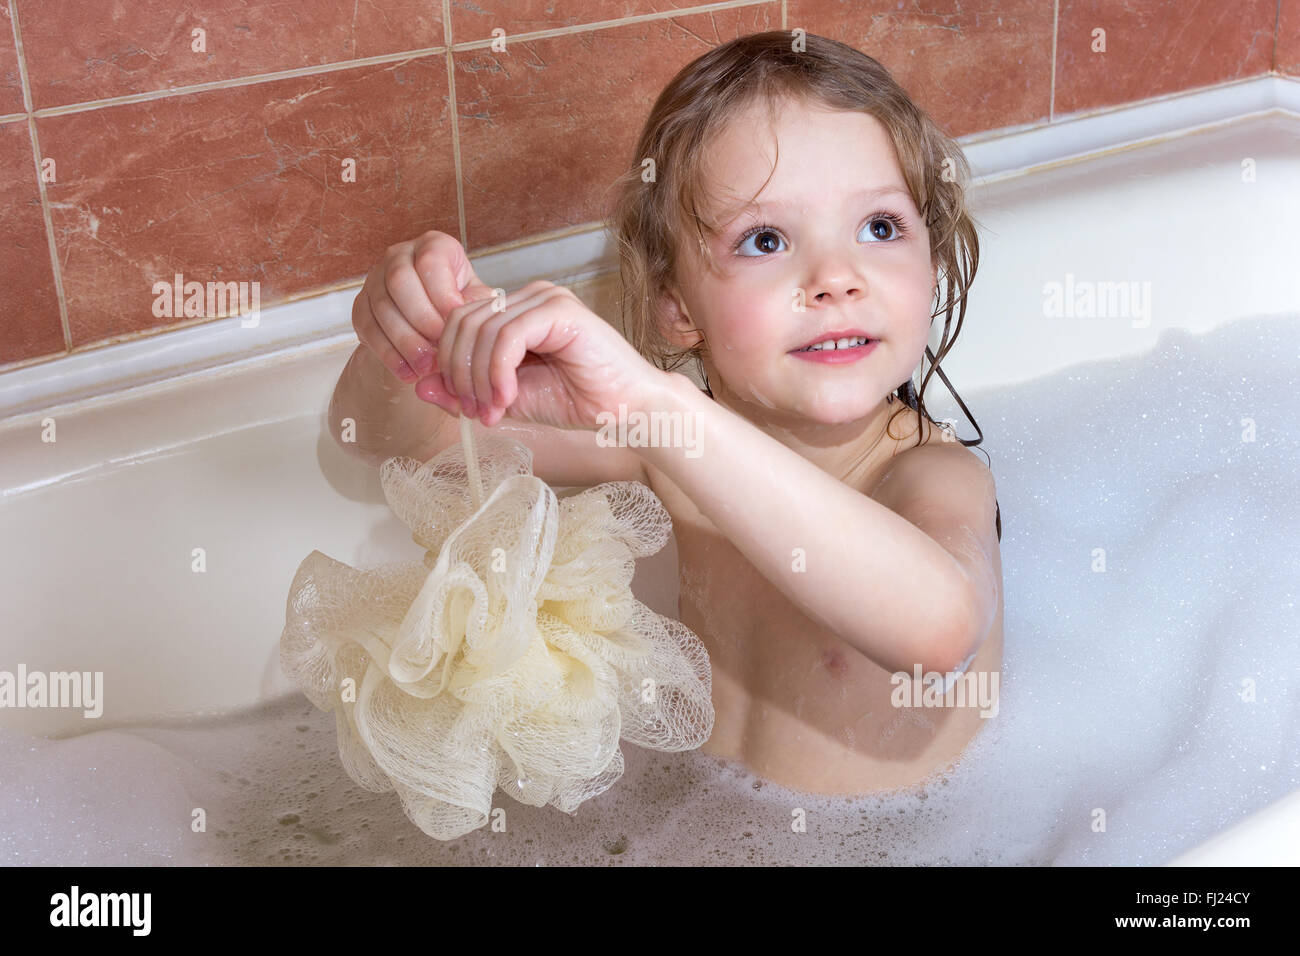 Little girl taking a bath bubbles Stock Photo - Alamy